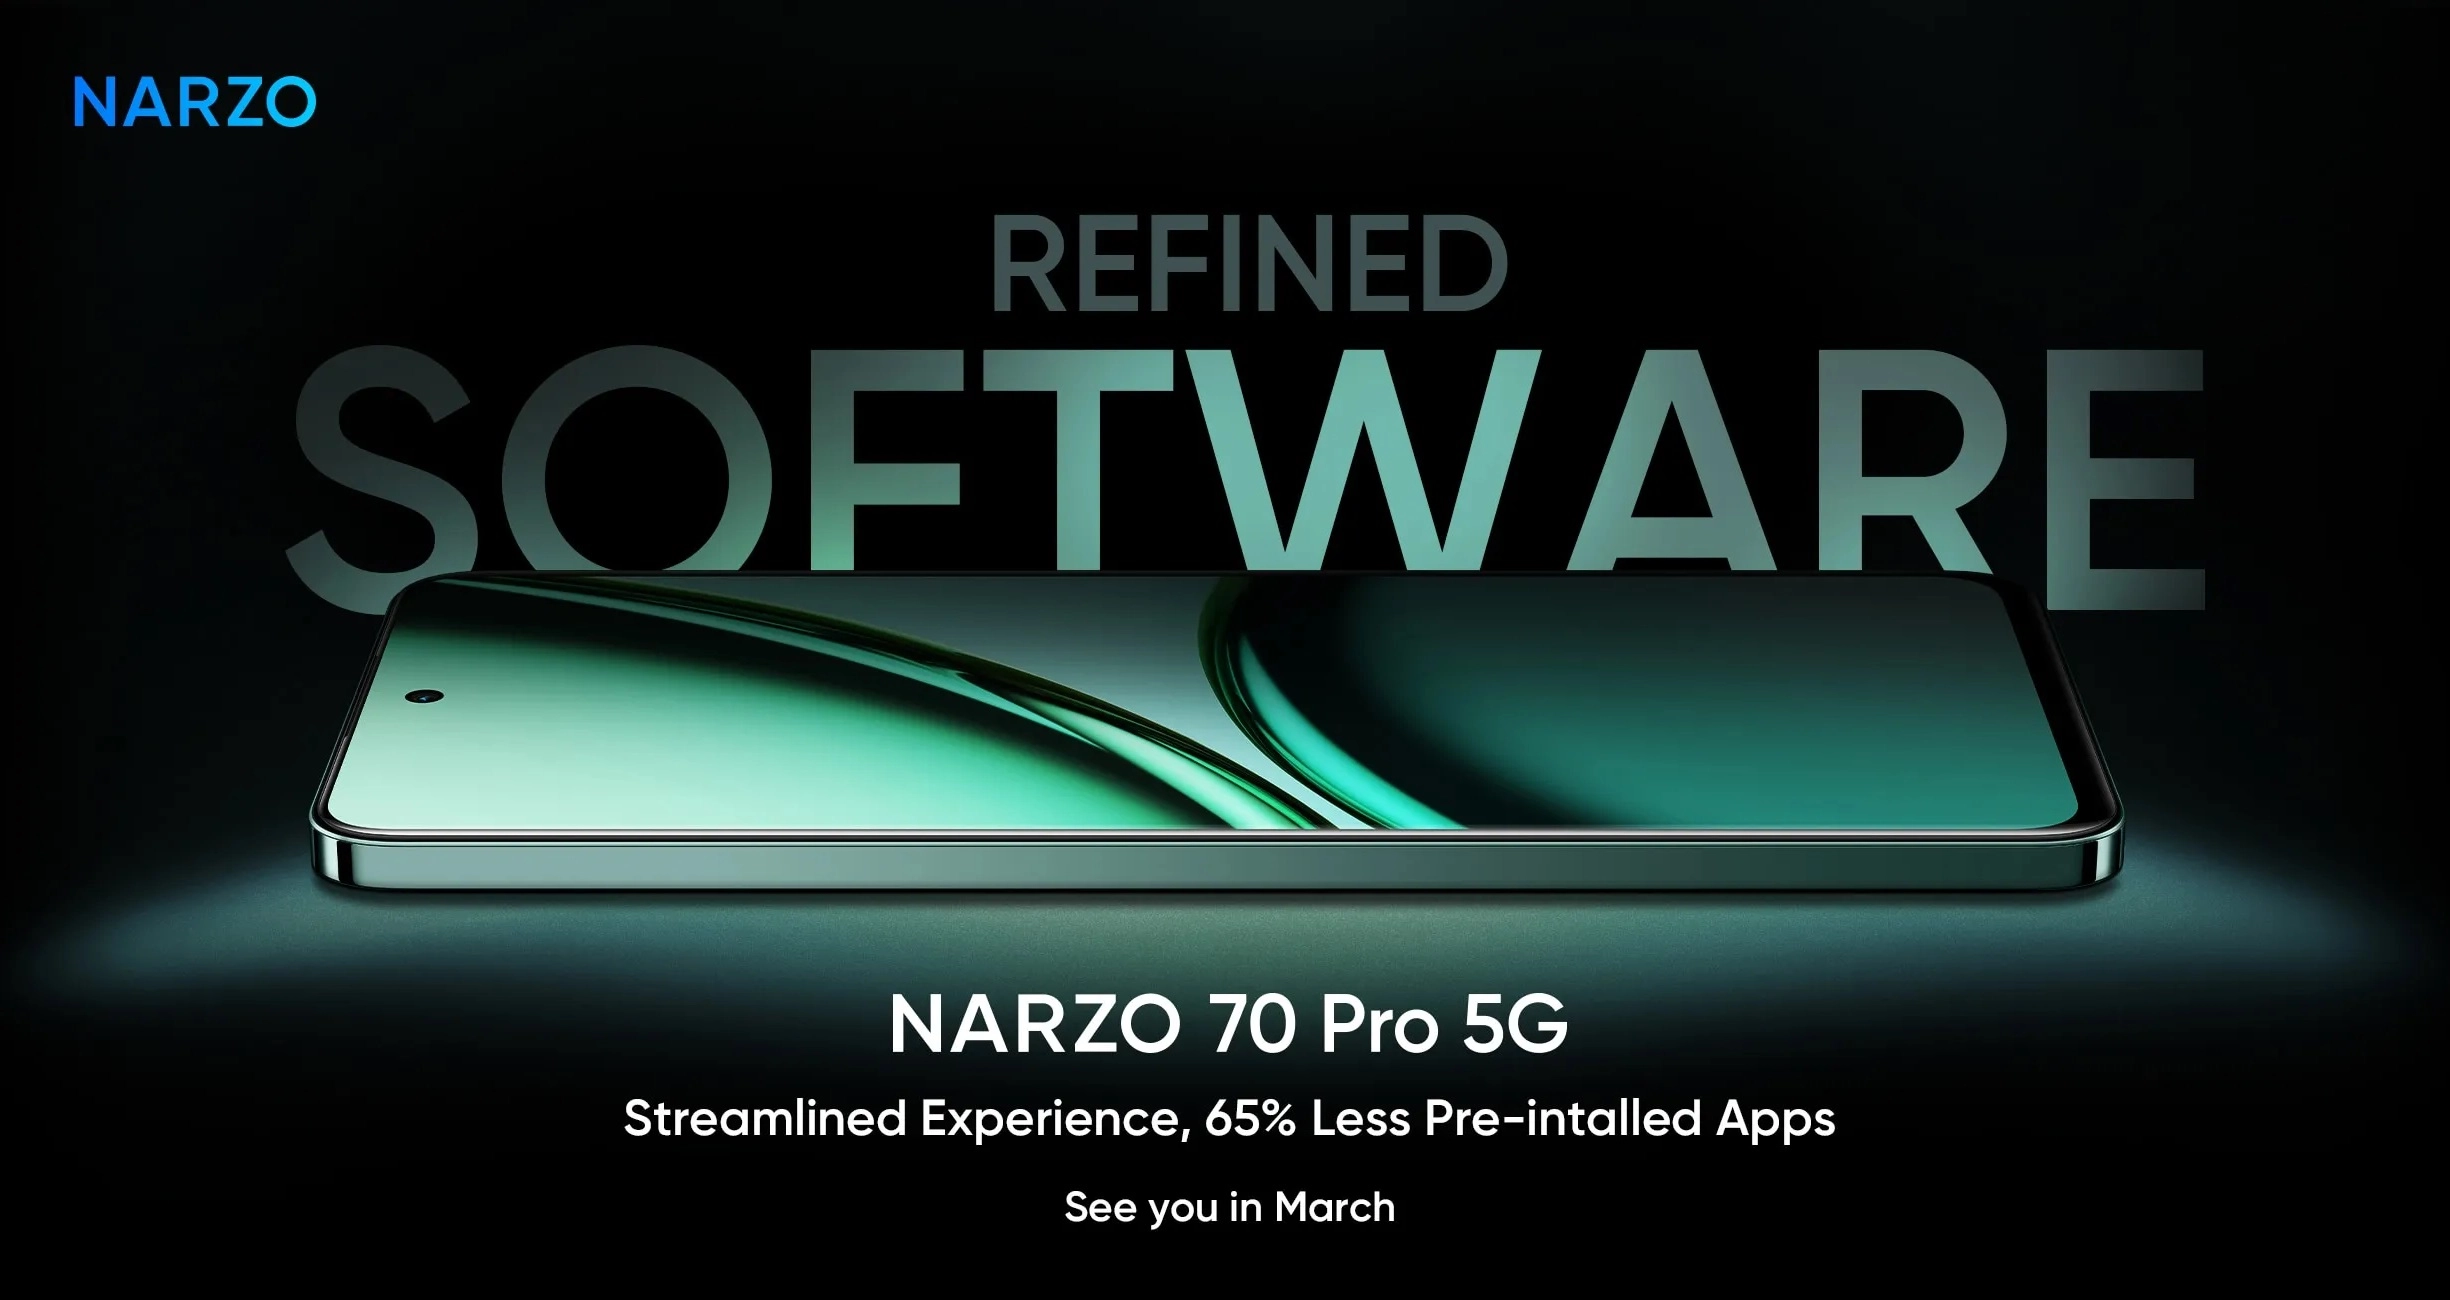 NARZO 70 Pro 5G: A New Era of Smartphone Experience